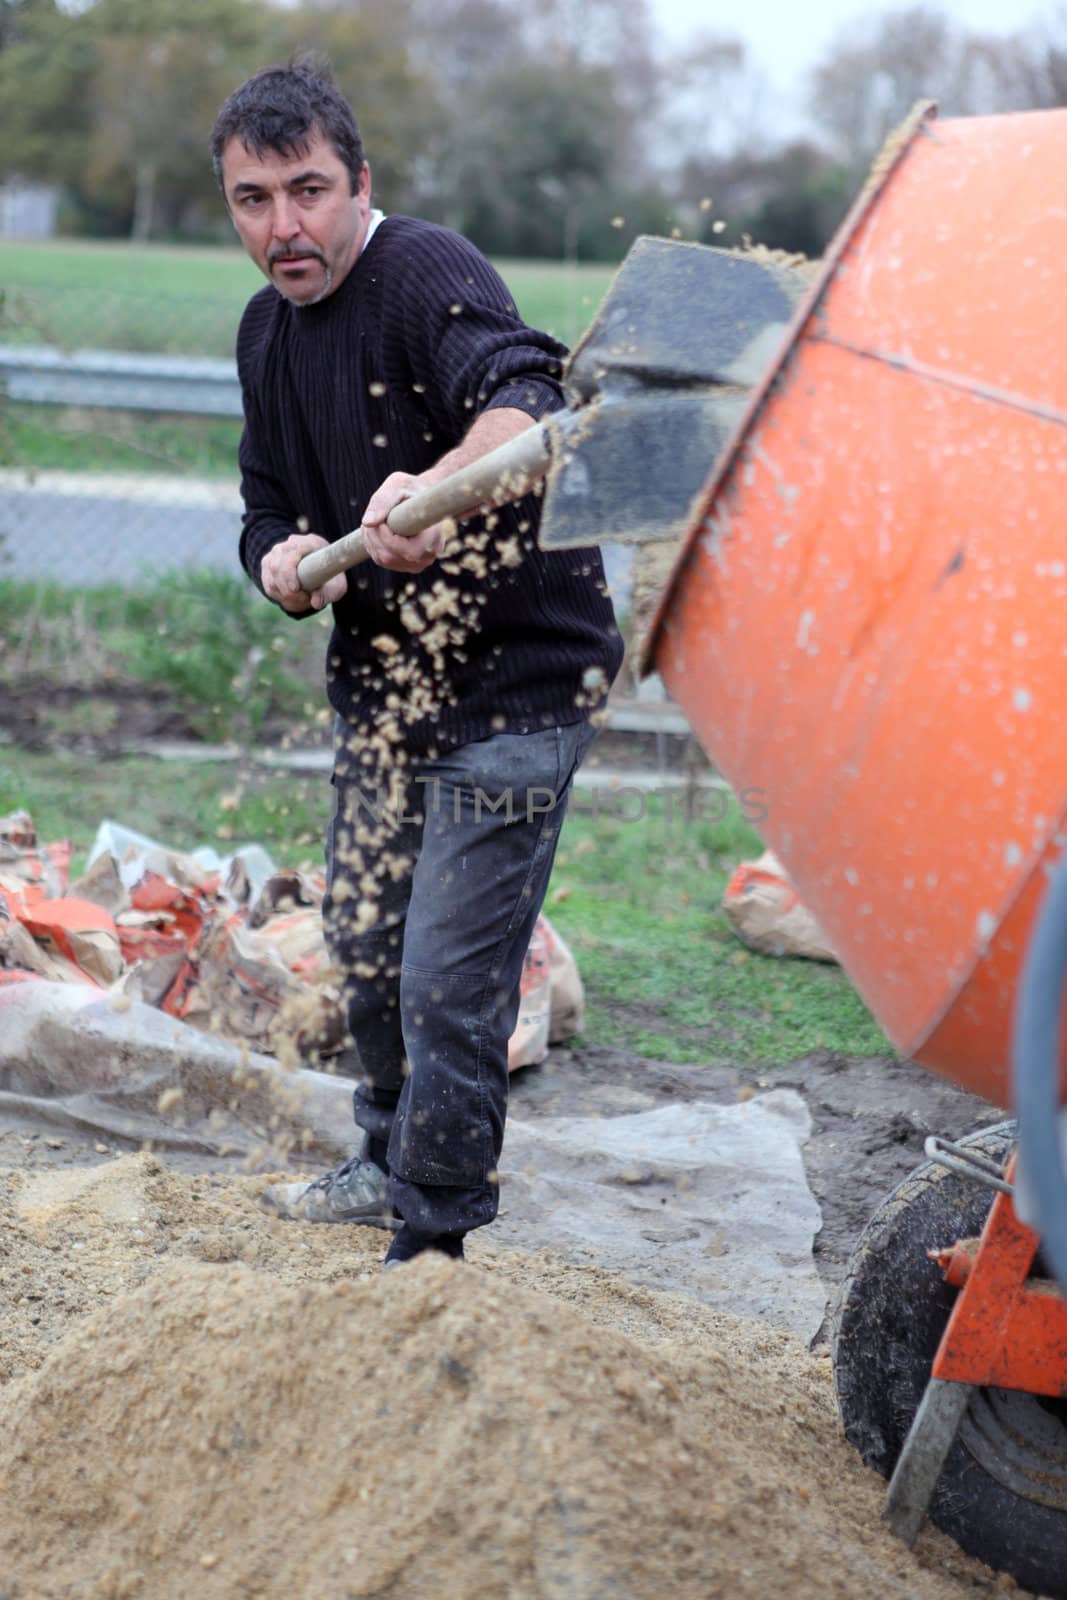 Labourer shovelling gravel into a mixer by phovoir